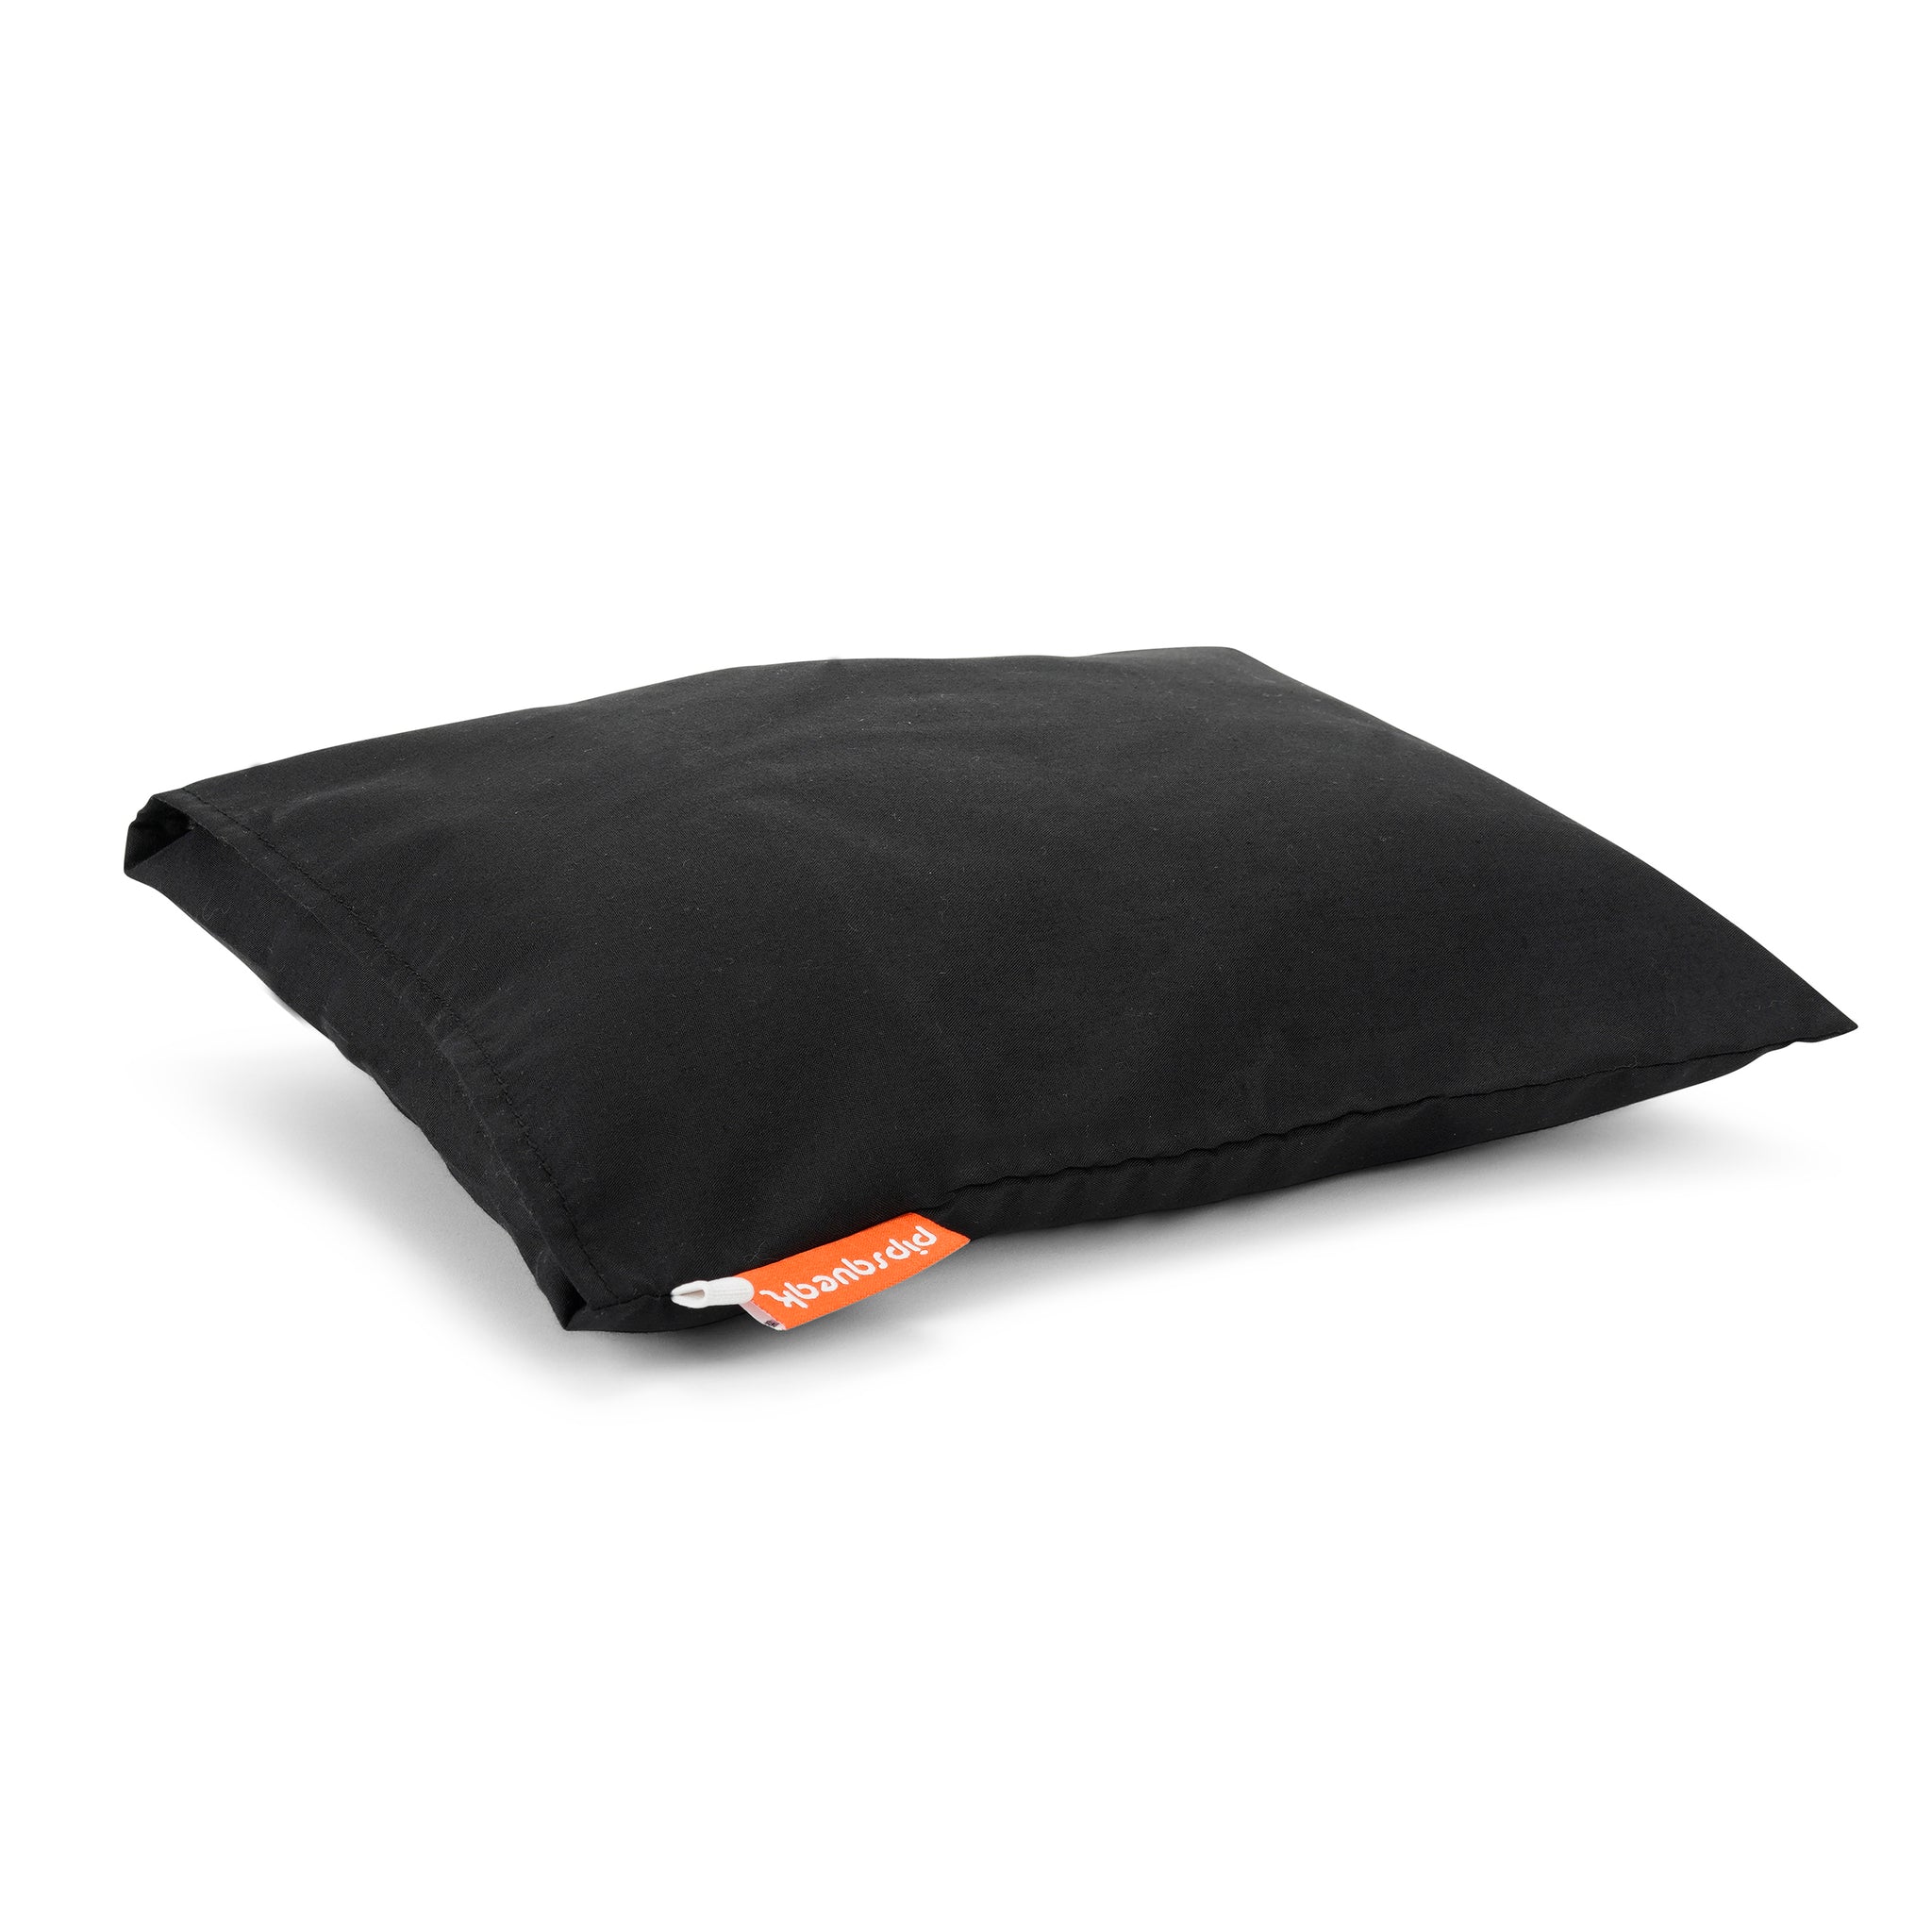 Pipsqueak® Pillow and Pillowcase